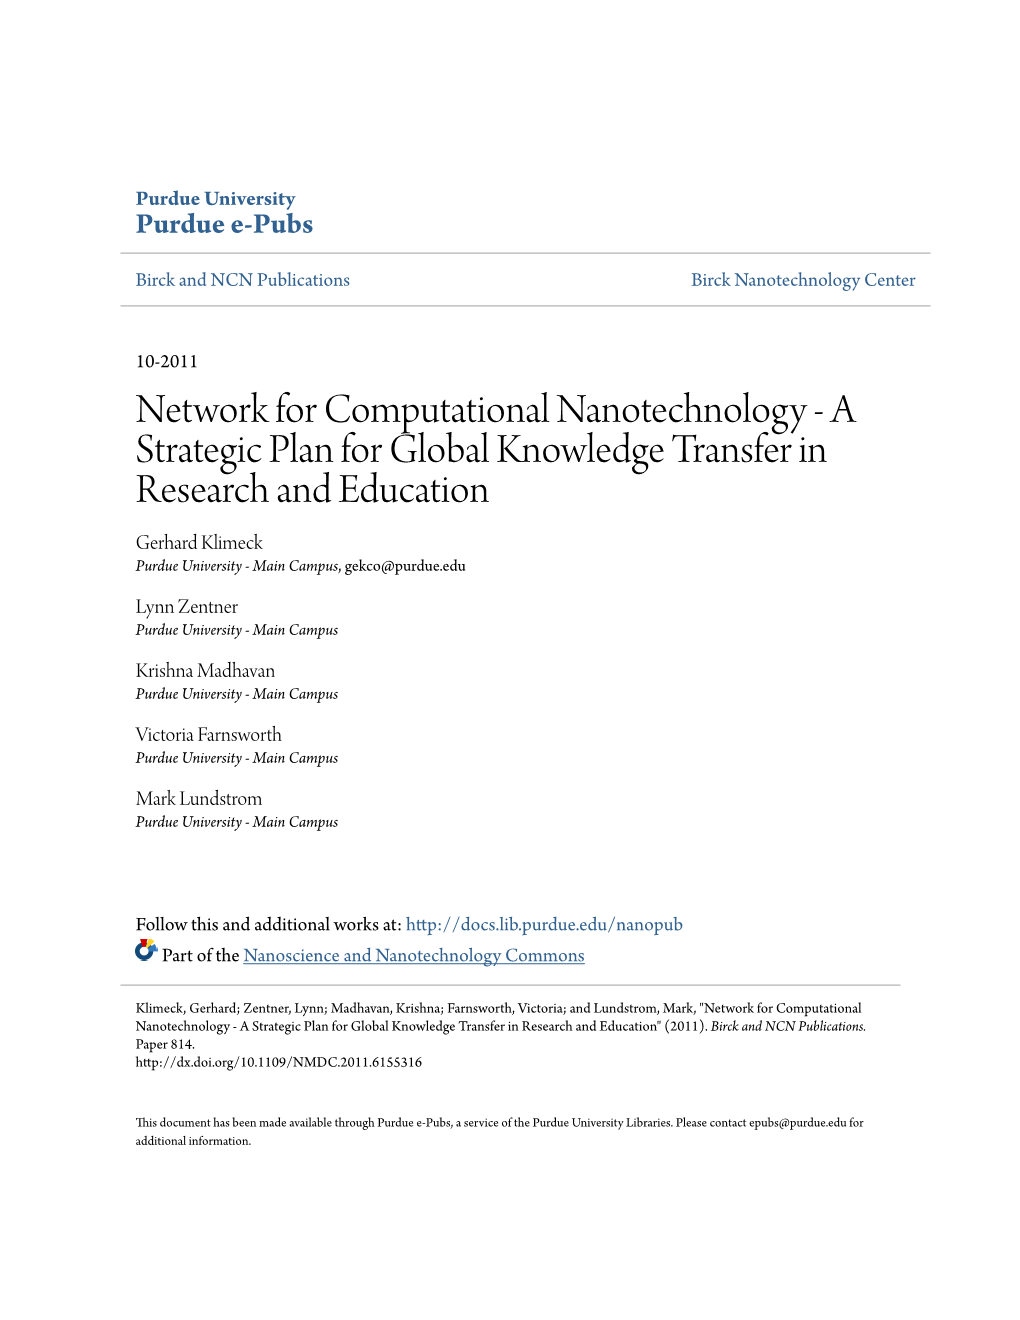 Network for Computational Nanotechnology